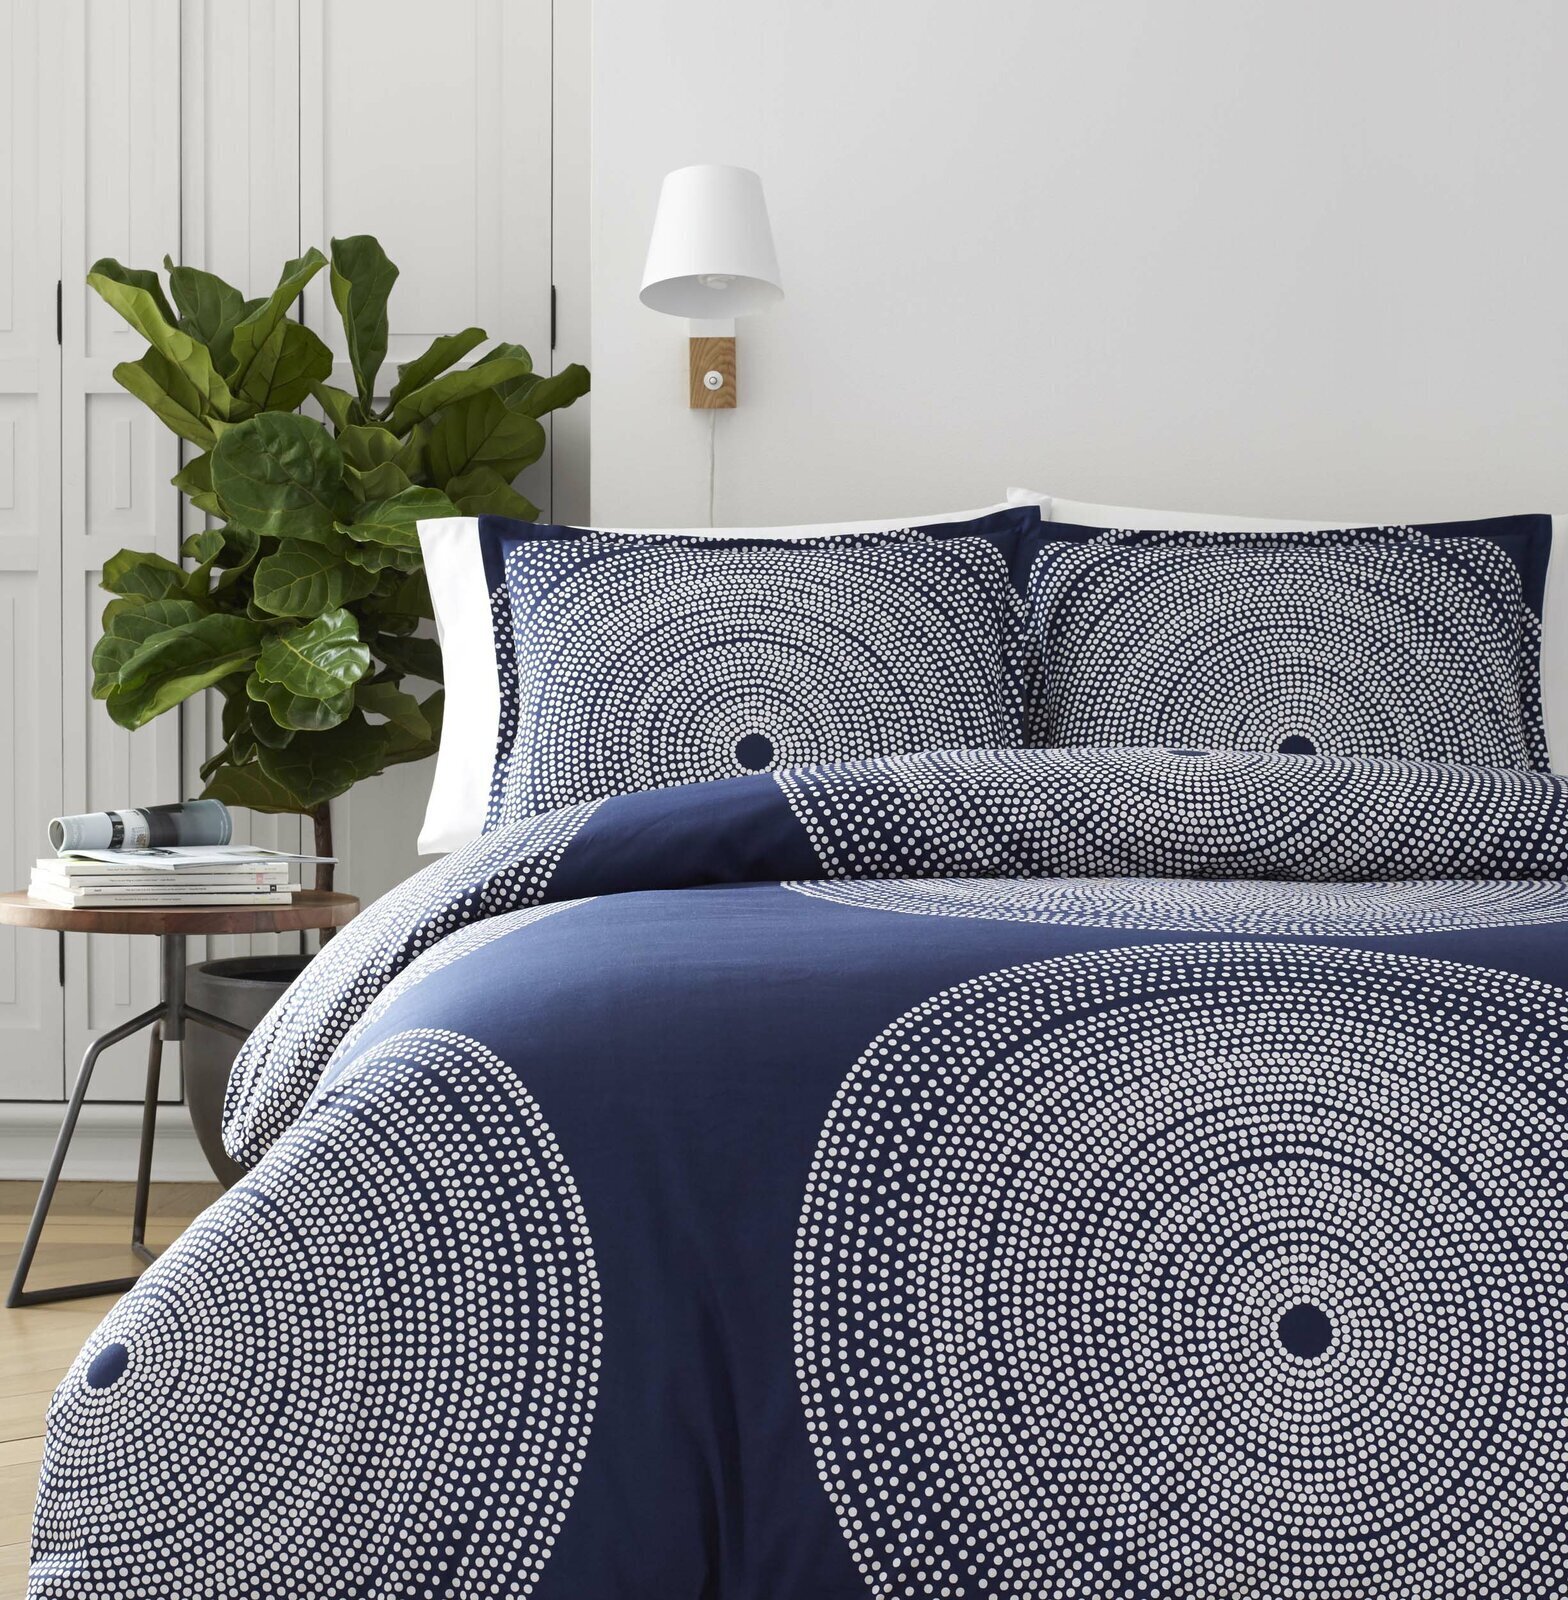 Comforter with Circular Patterns